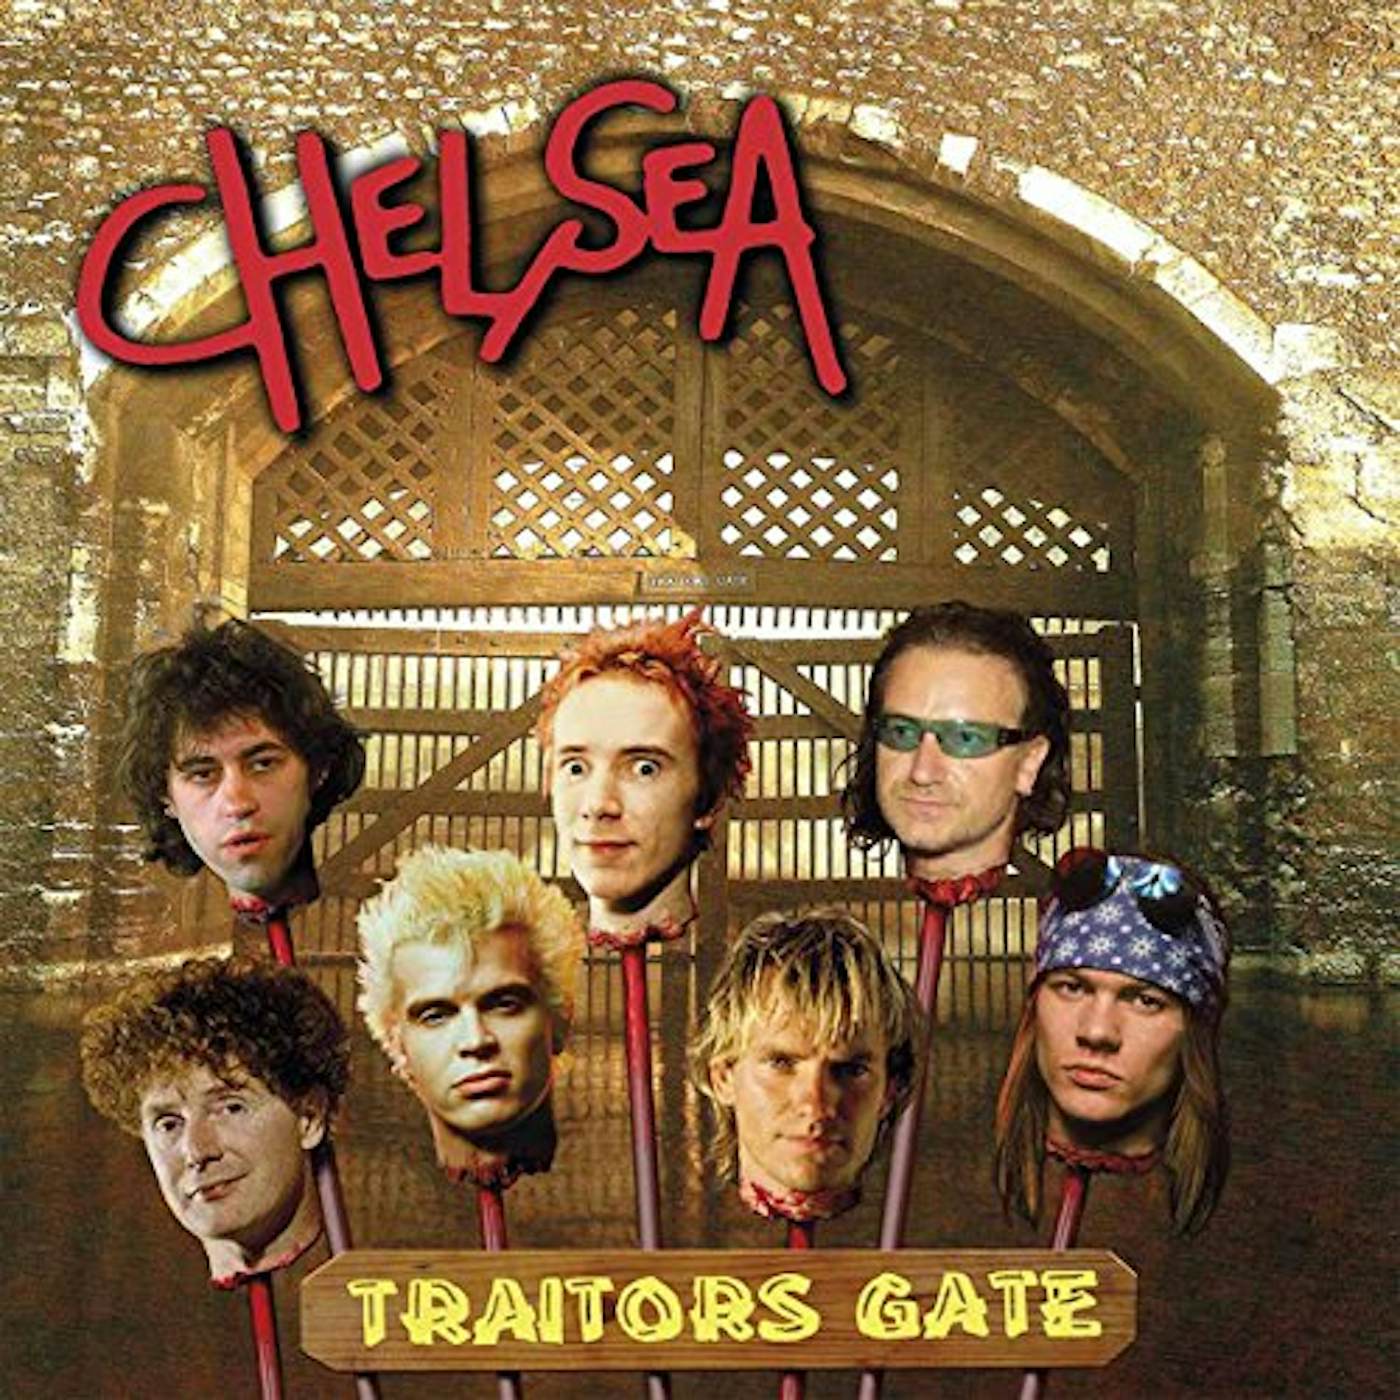 Chelsea TRAITOR'S GATE Vinyl Record